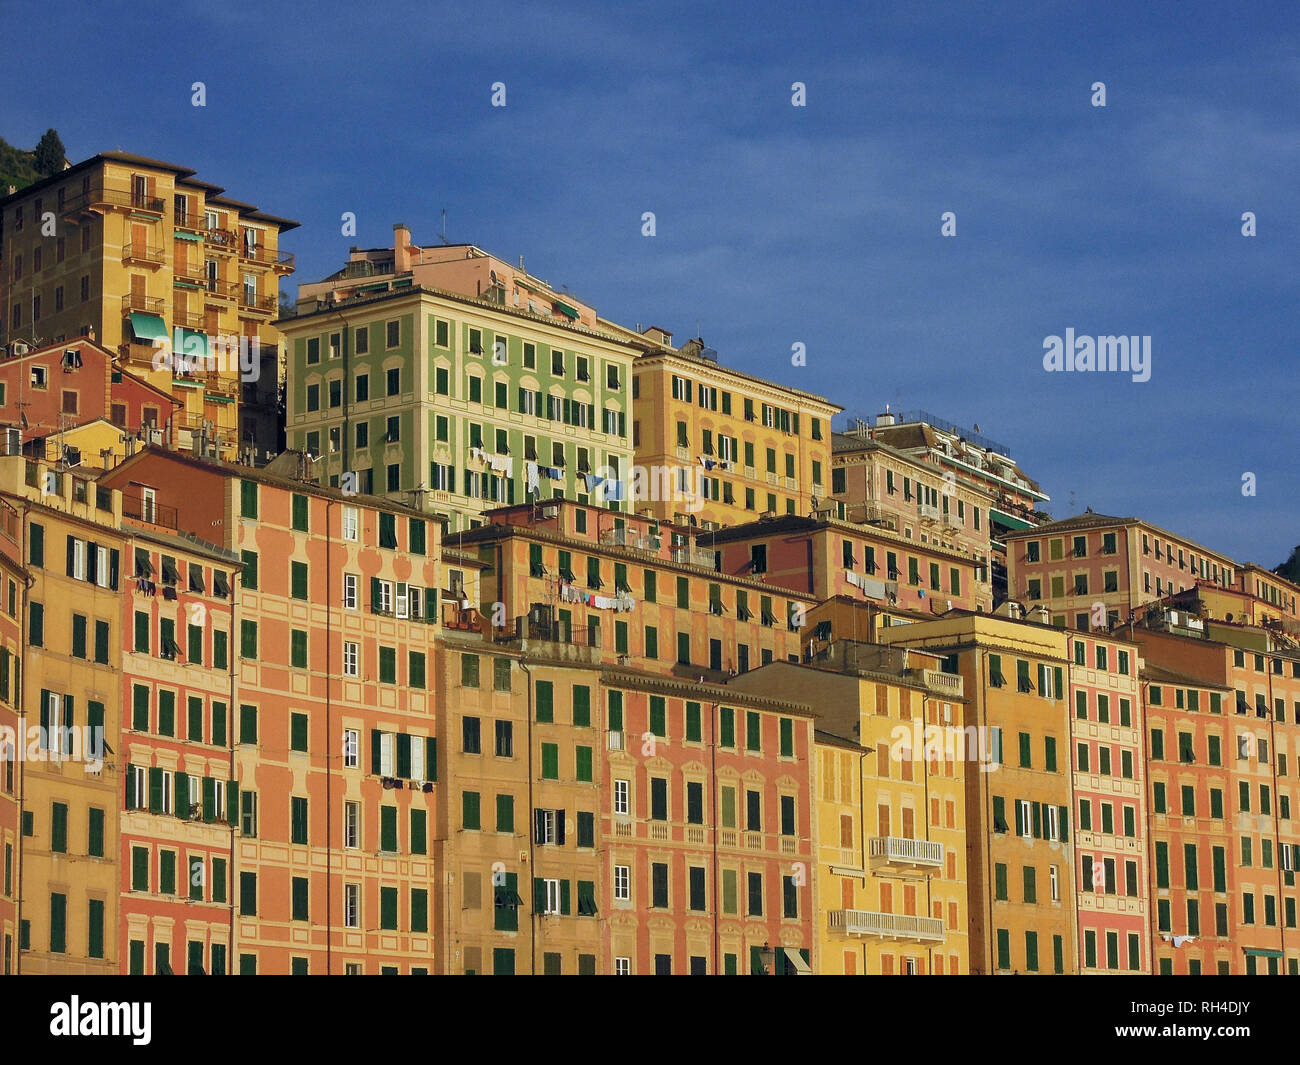 Vibrant yellow and orange buildings, Camogli, Liguria, Italy Stock Photo